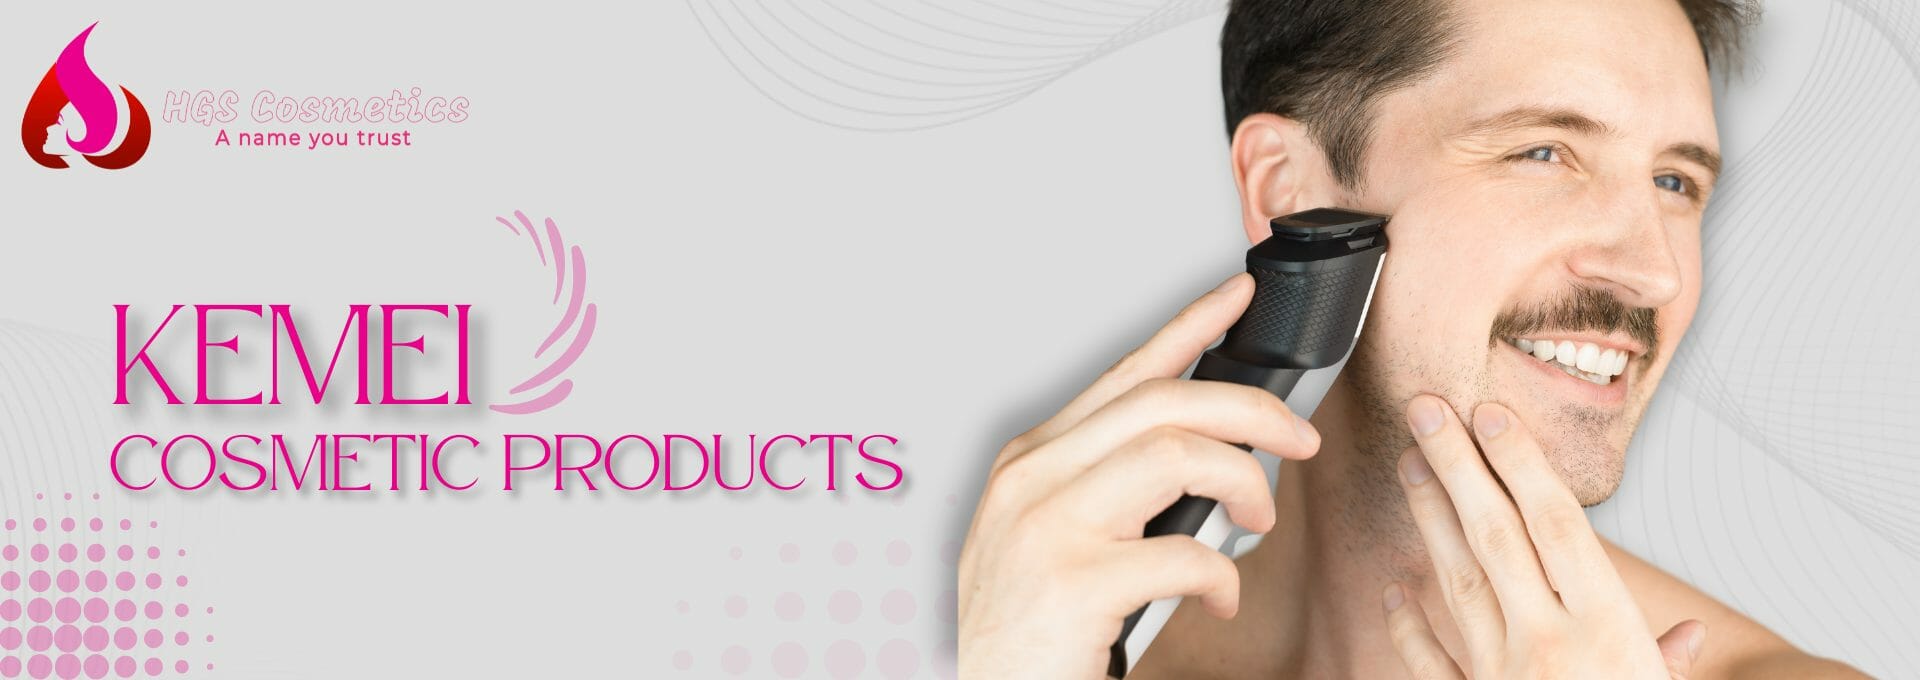 Buy Original Kemei Products Online in Pakistan @ HGS Cosmetics